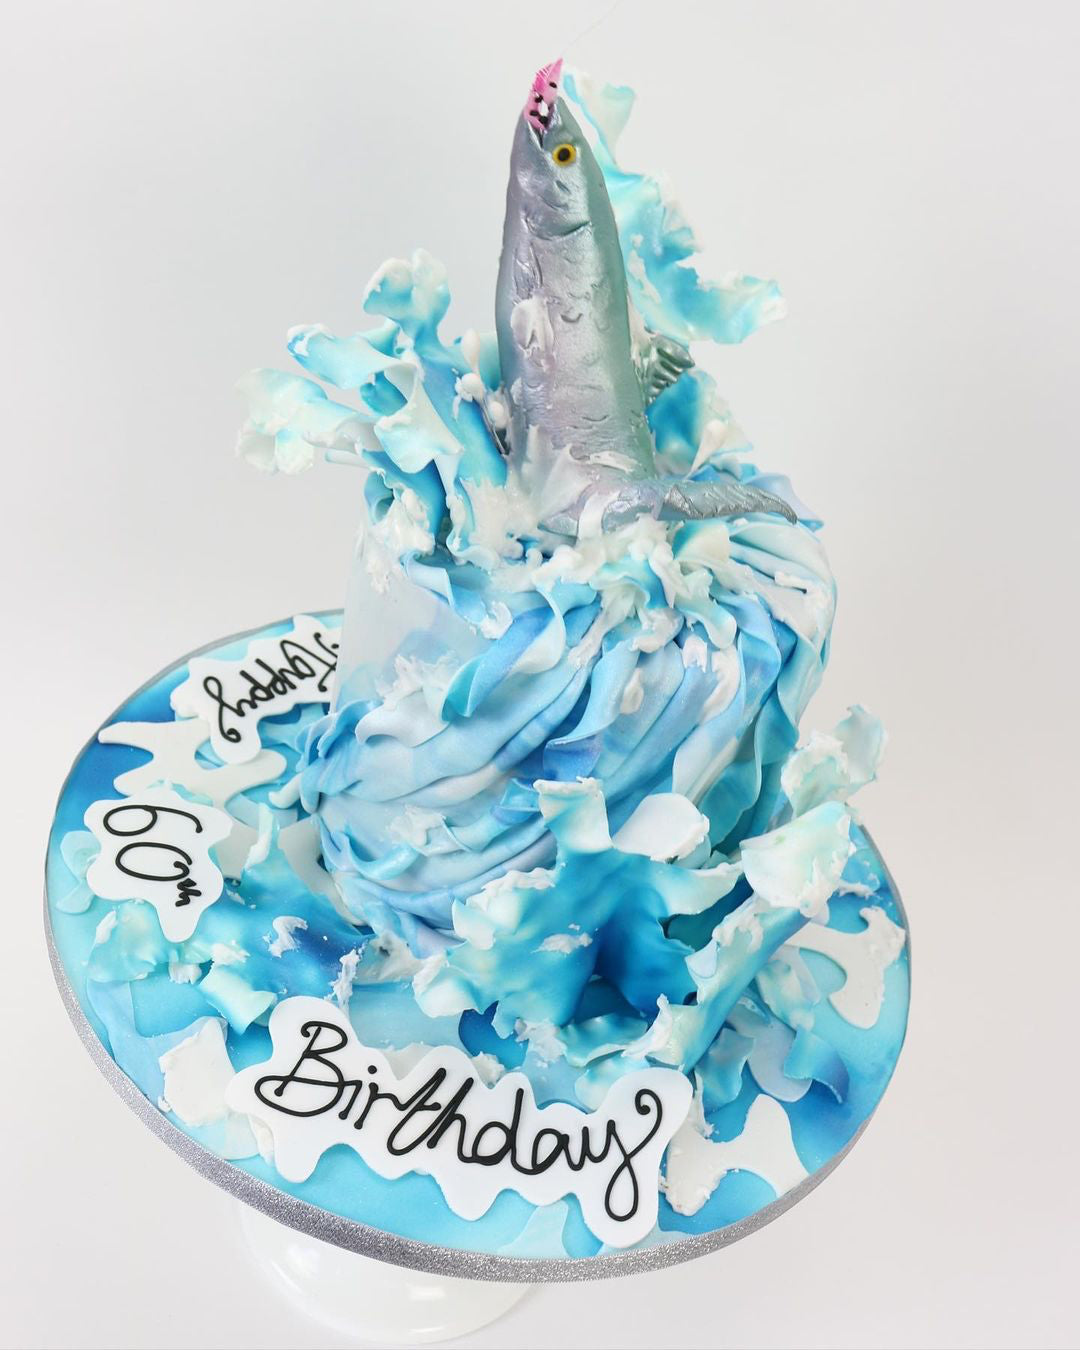 Fishing Theme Birthday Cake - The Cake Mixer | The Cake Mixer